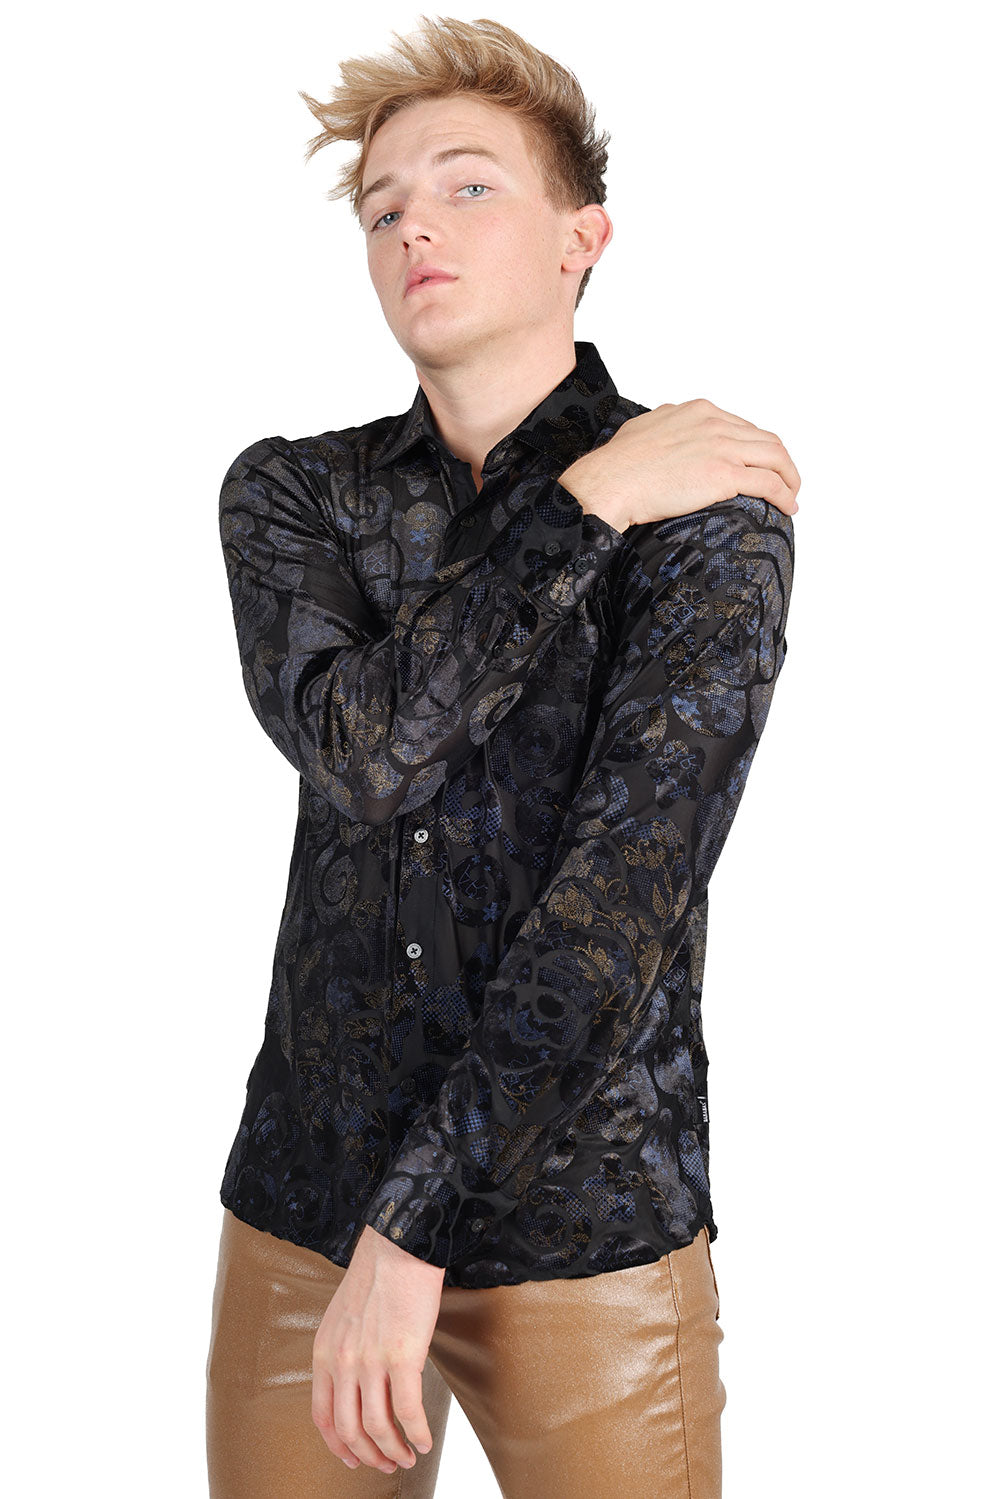 BARABAS Men's Geometric Long Sleeve Button Down Shirt 2LVL14 Black